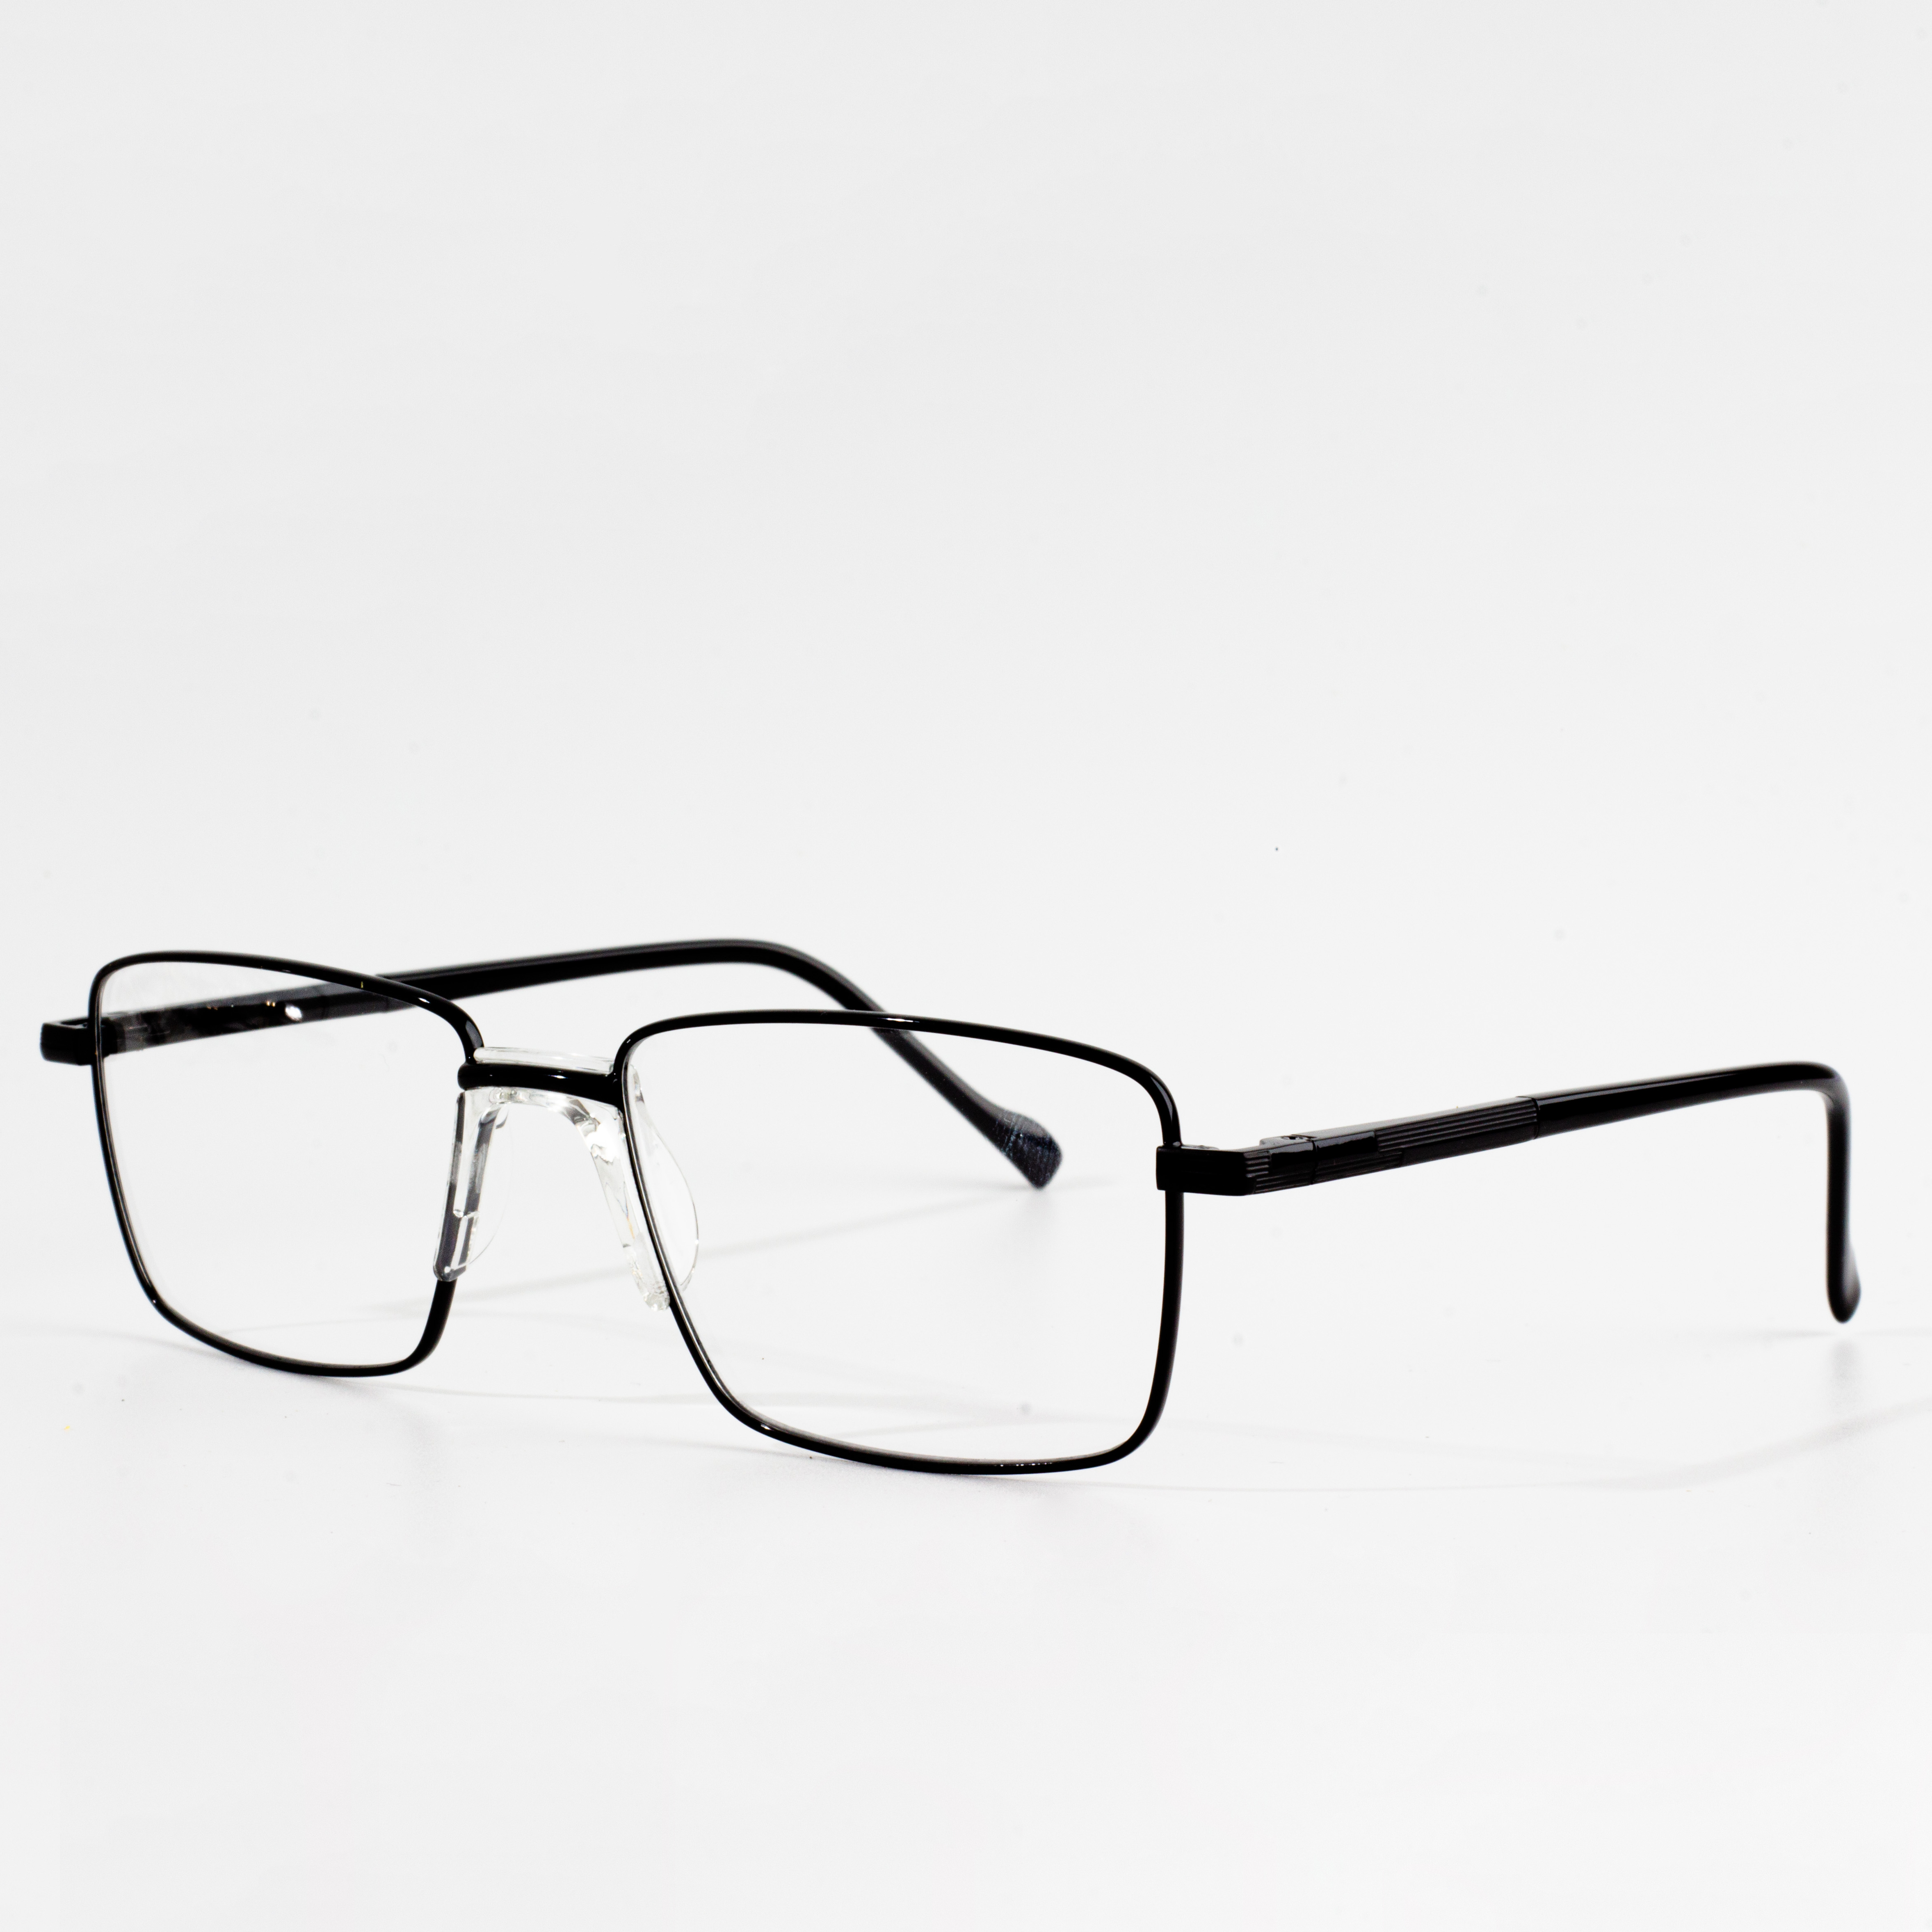 popularibus tabulae eyeglass